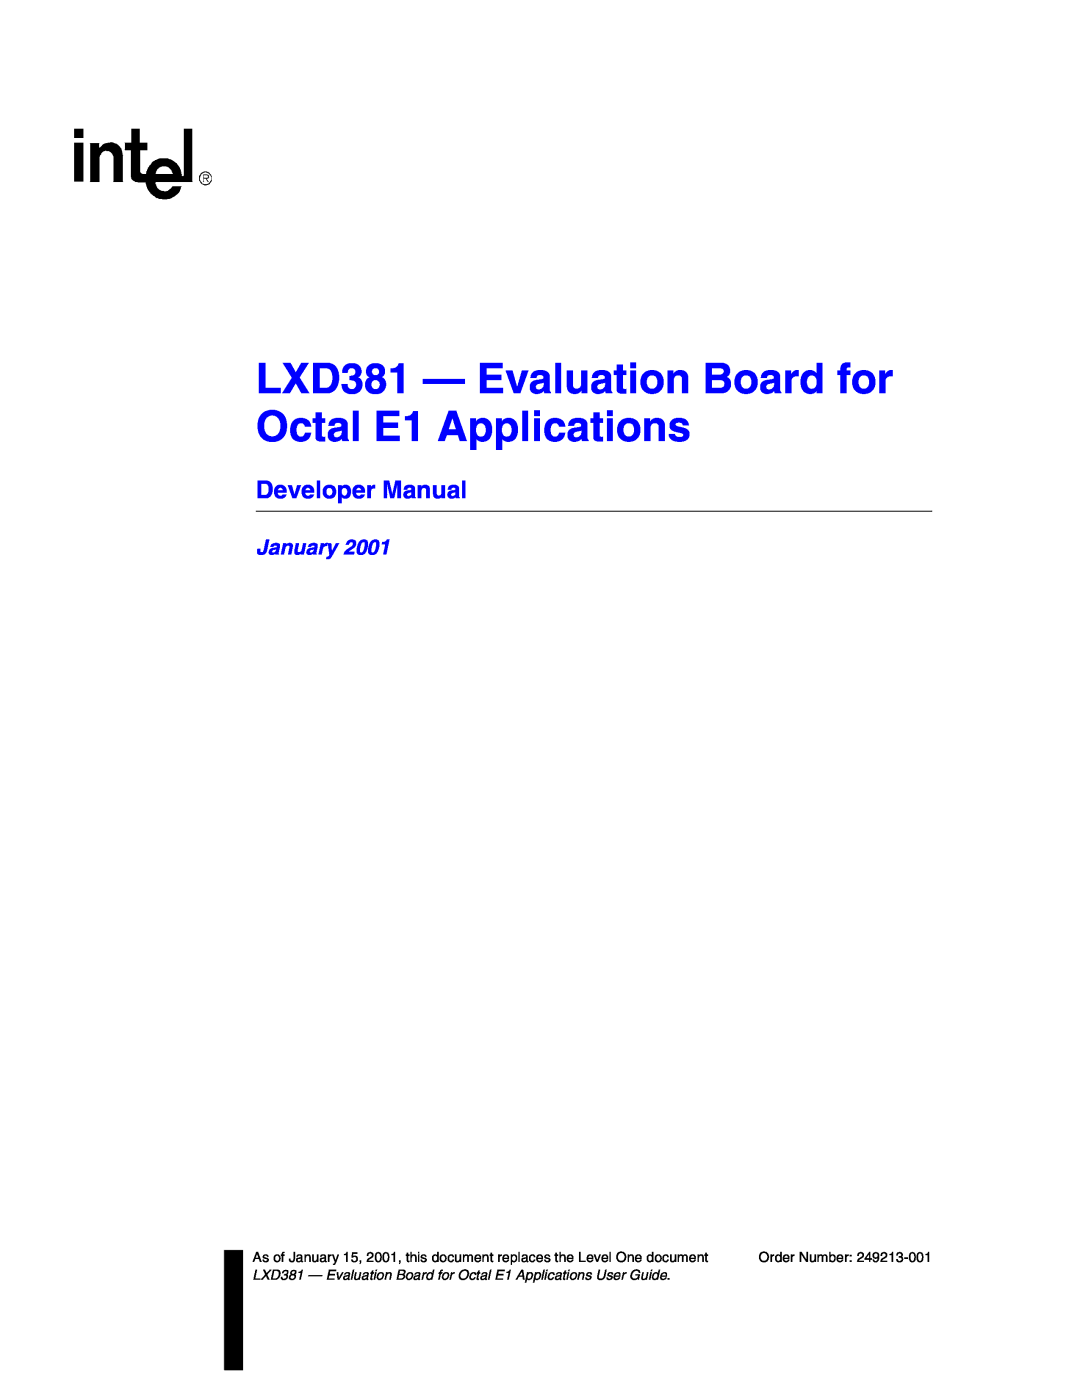 Intel manual Developer Manual, LXD381 - Evaluation Board for Octal E1 Applications, January, Order Number 